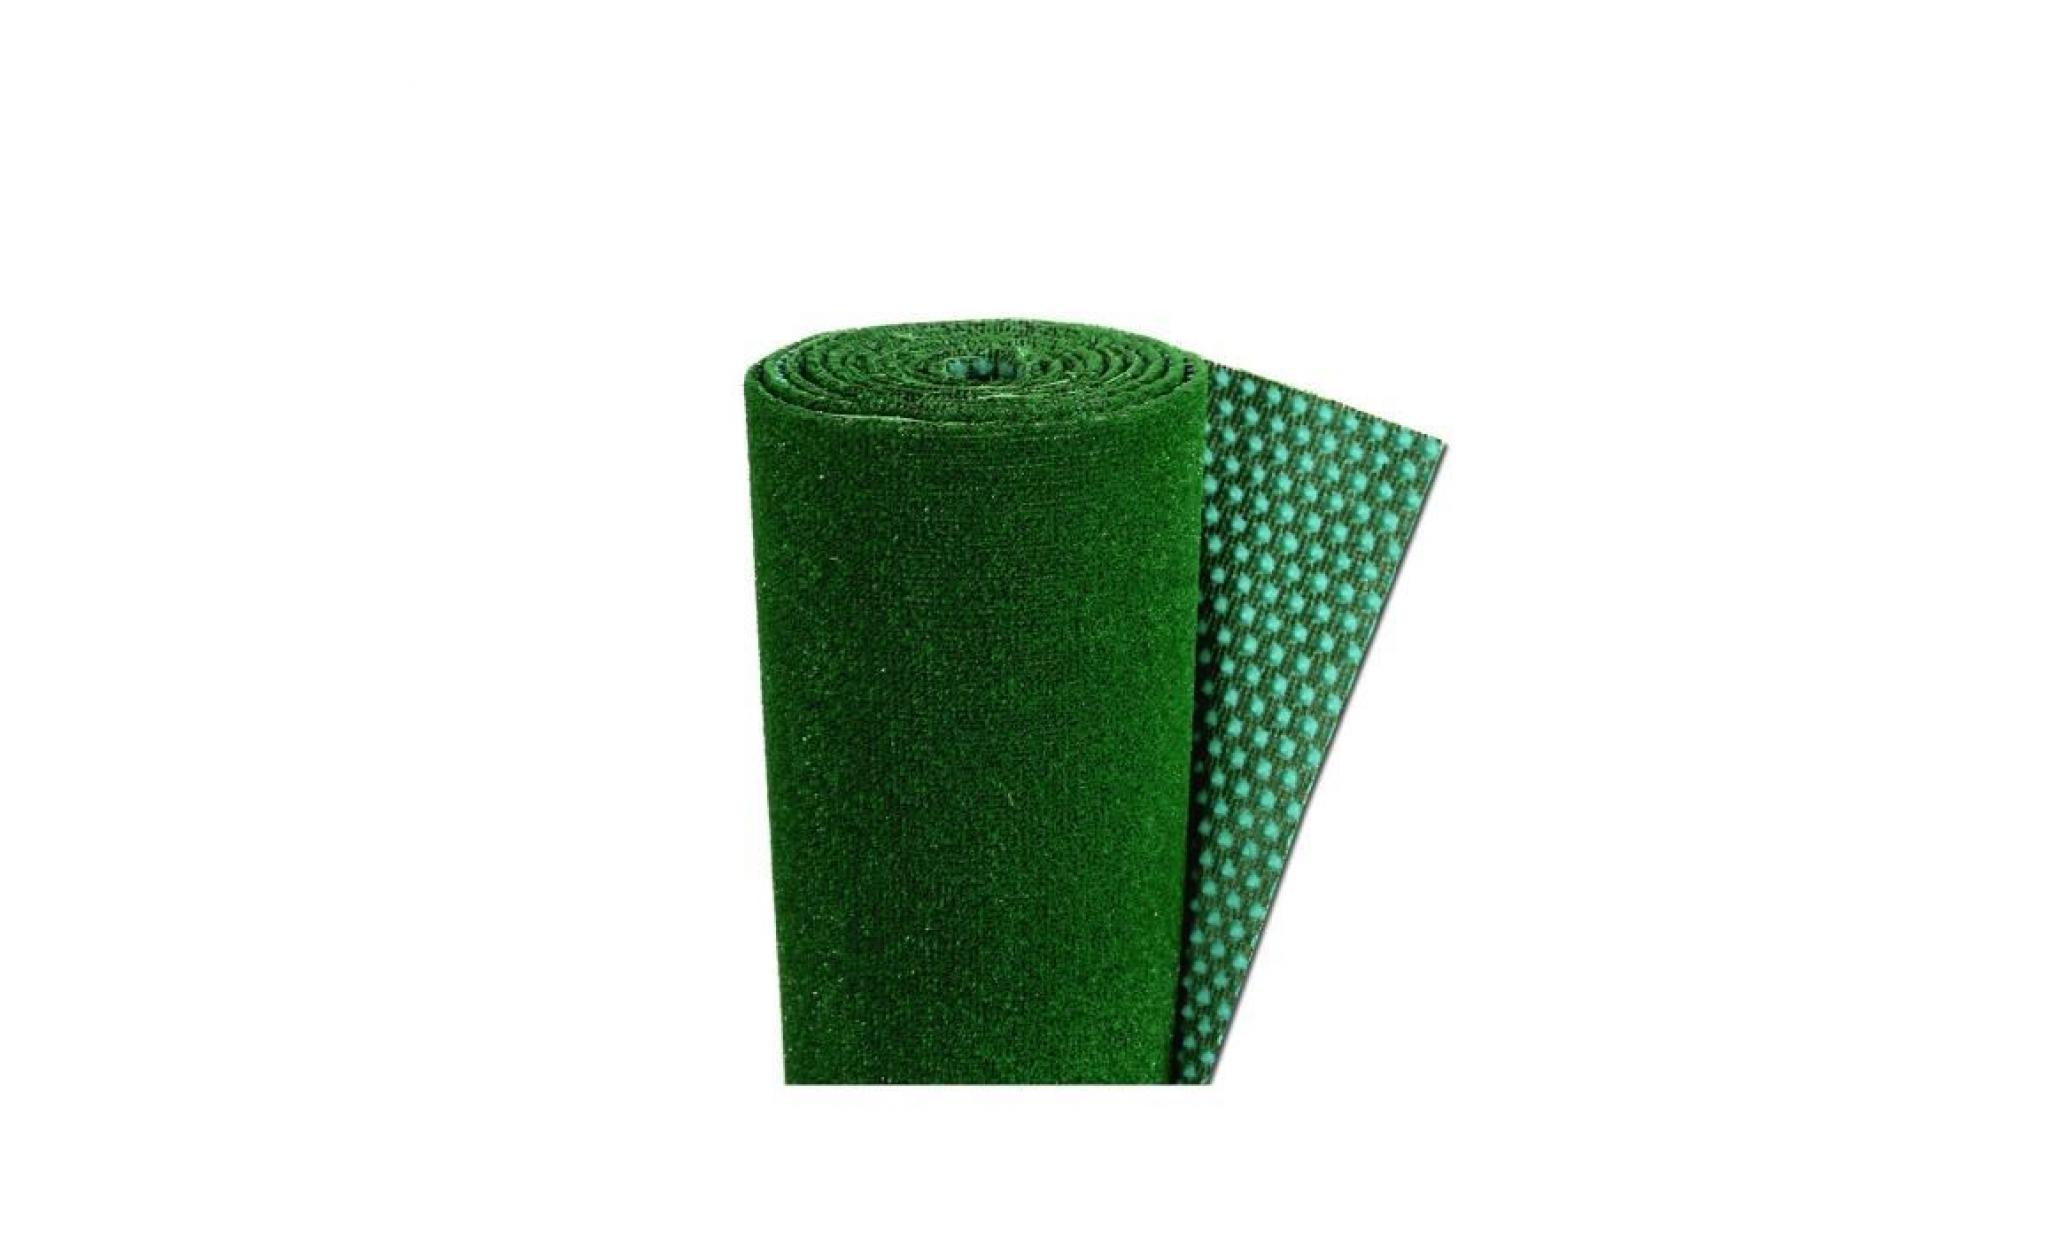 york   tapis type gazon artificiel avec nubs – pour jardin, terrasse, balcon   vert   [200x150 cm] pas cher